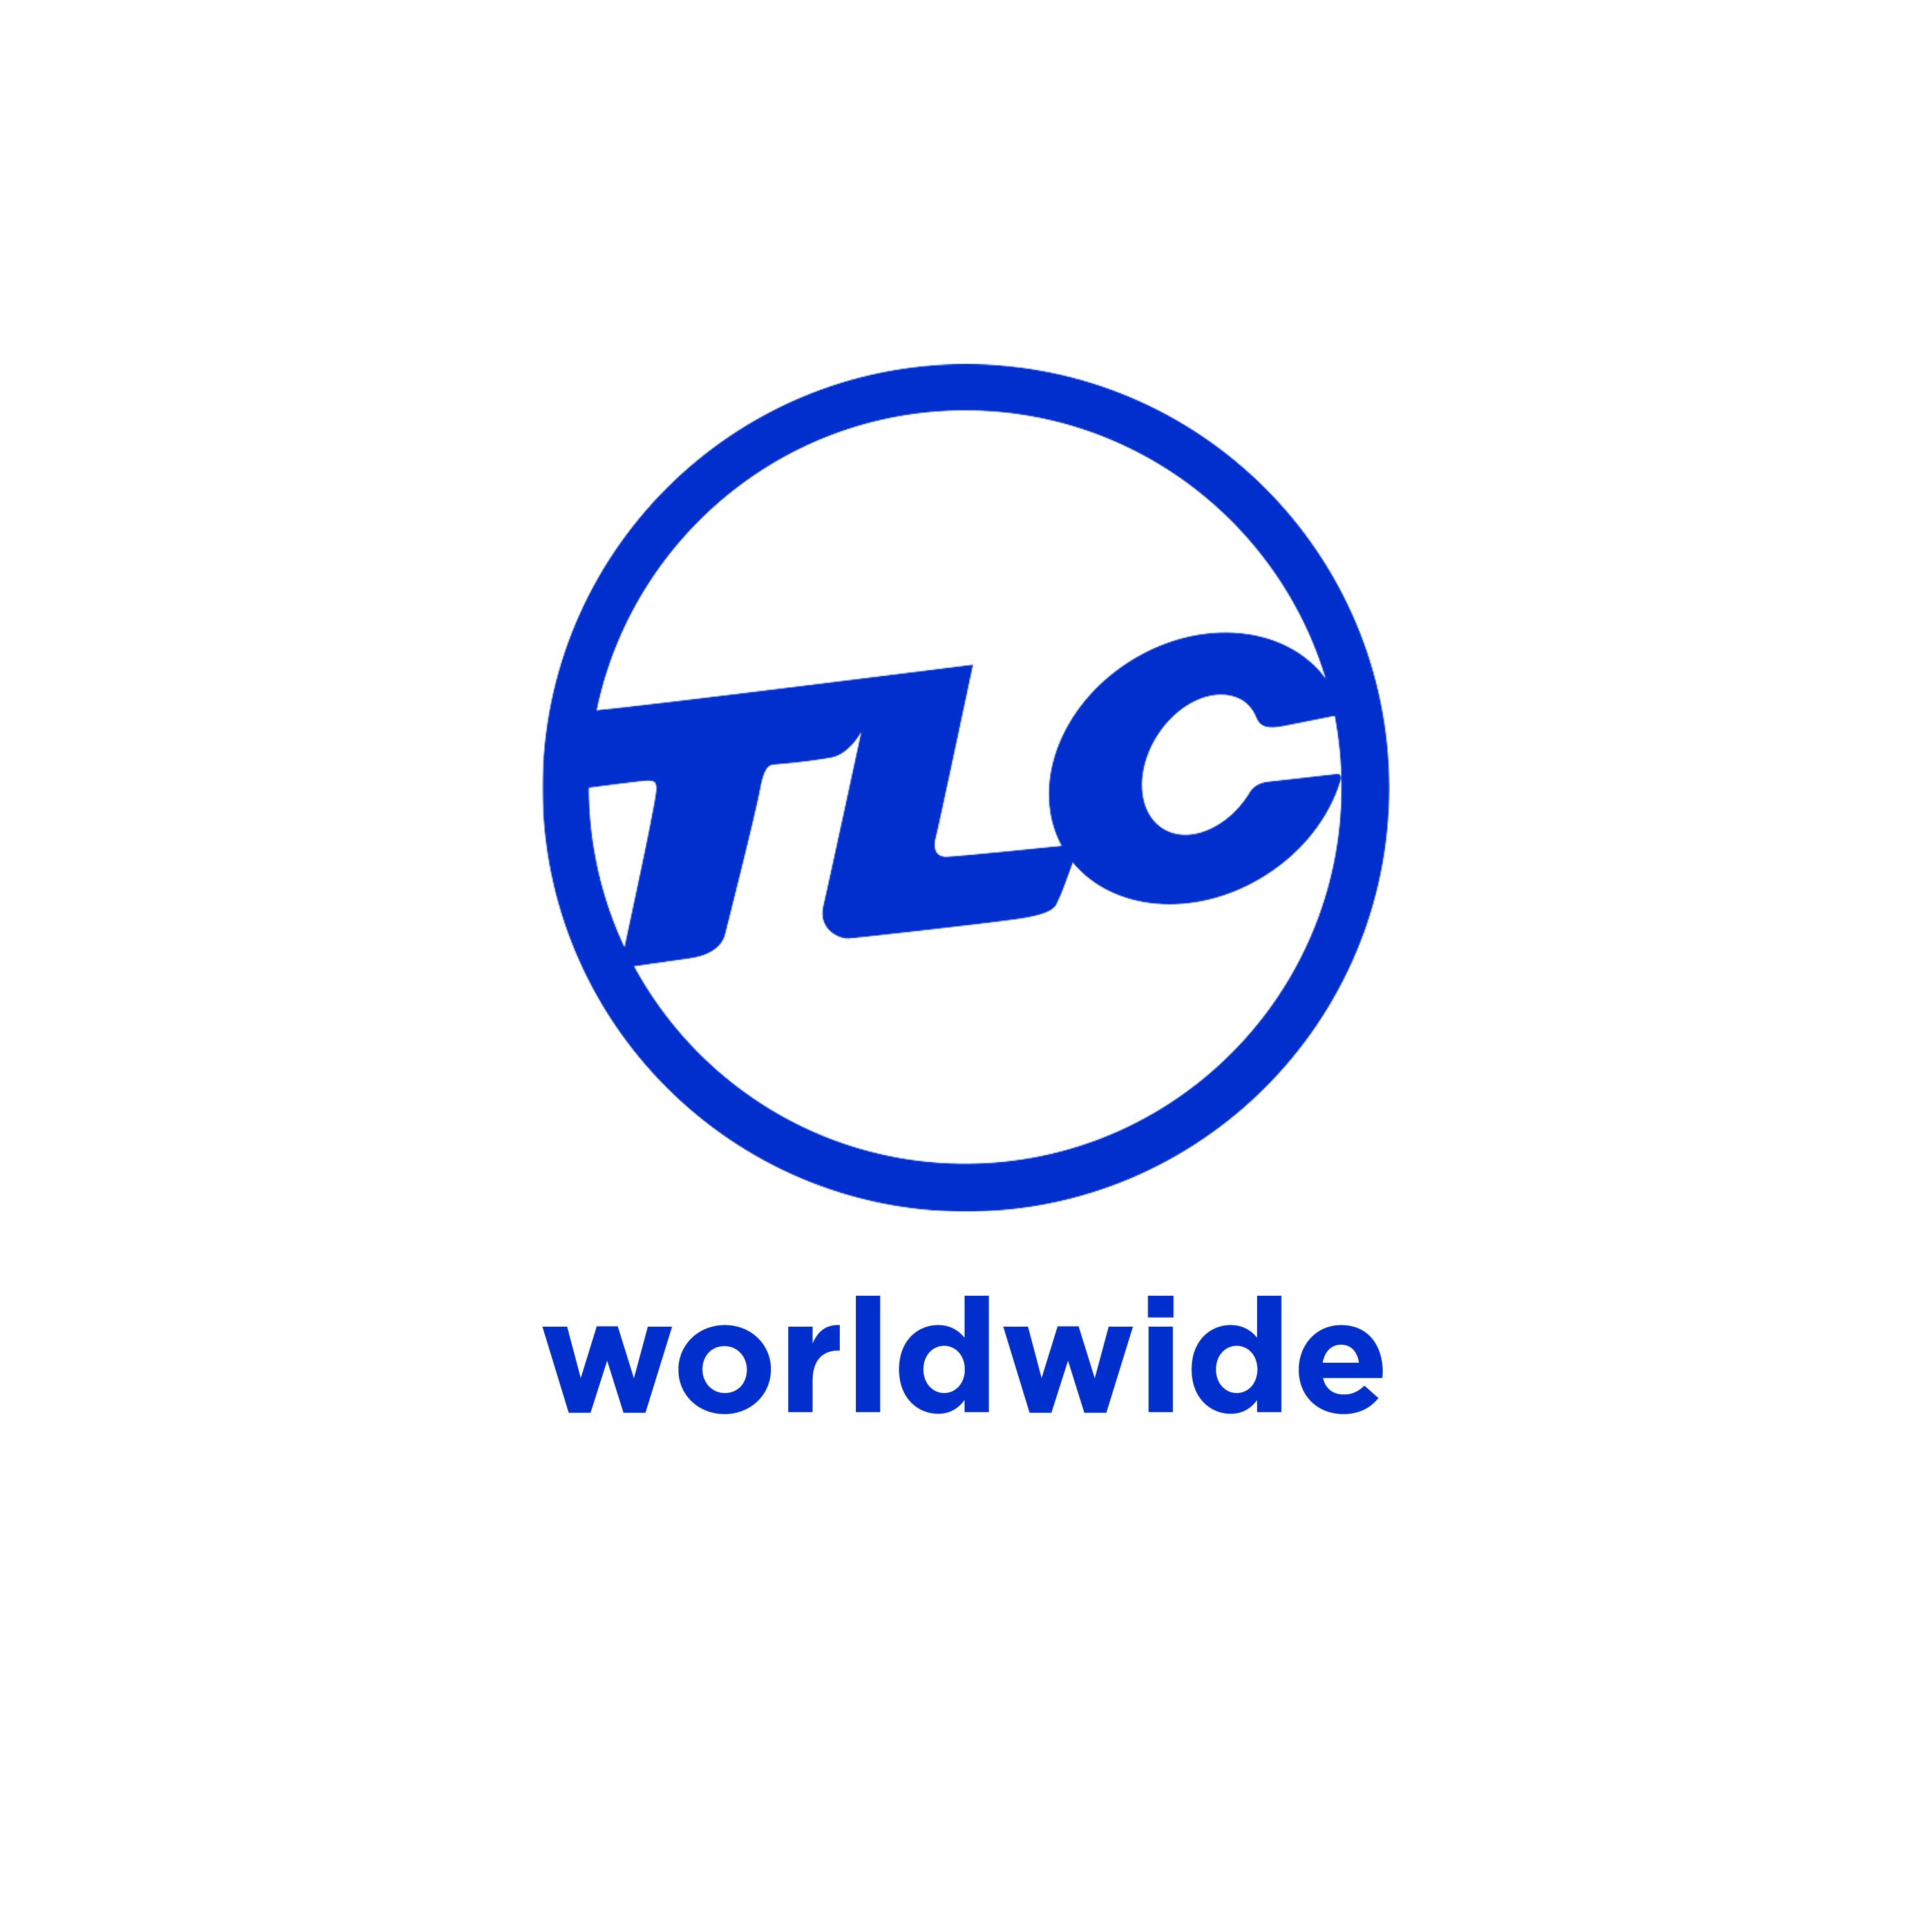 tlc logo 2